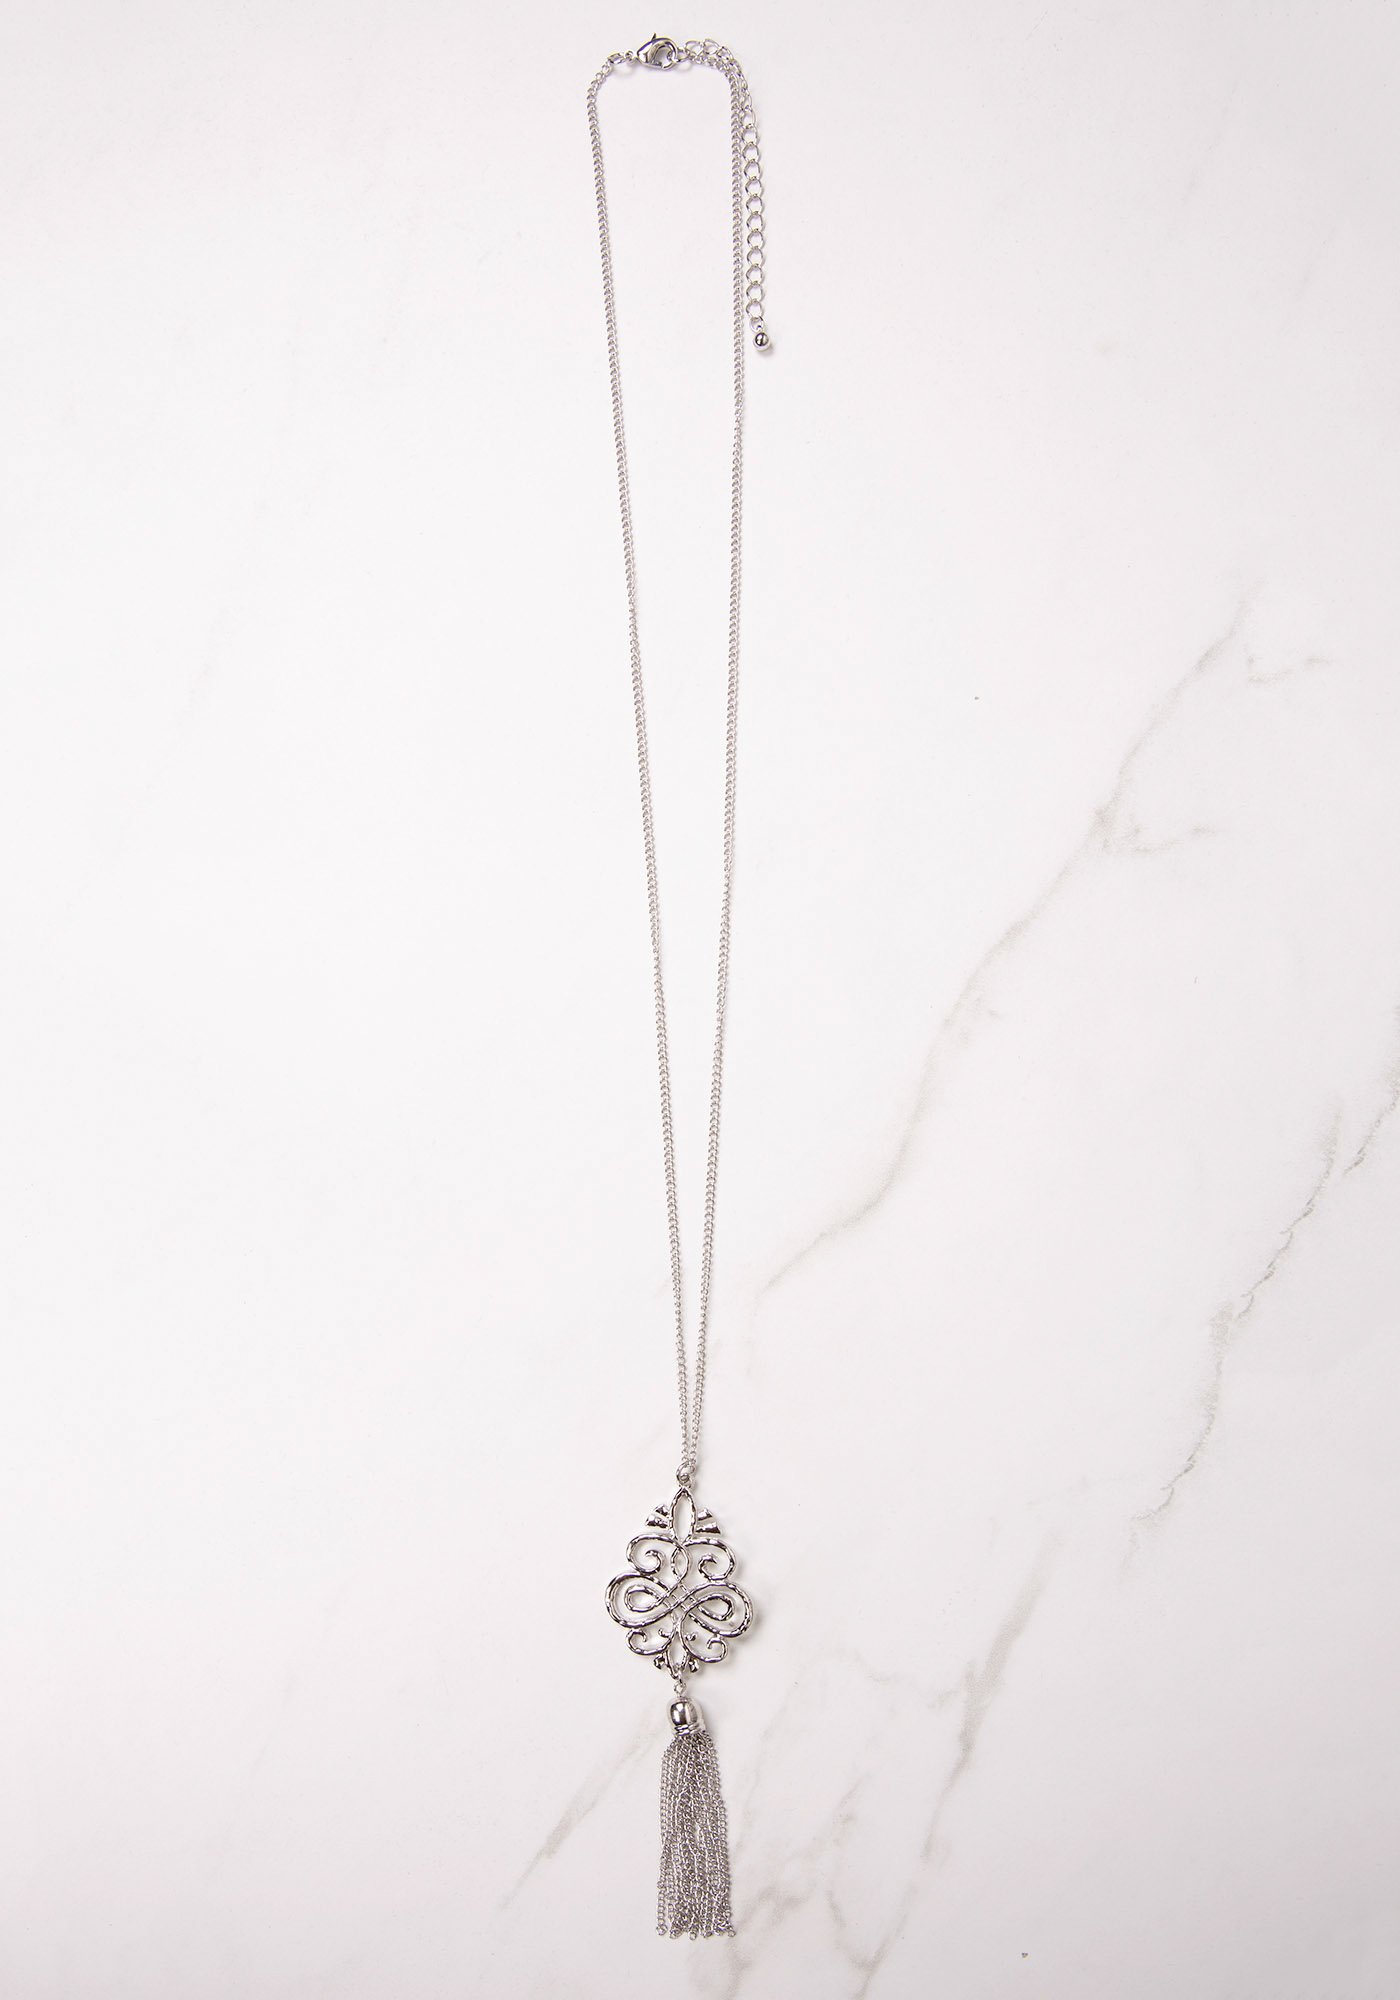 necklace w filigree pendant